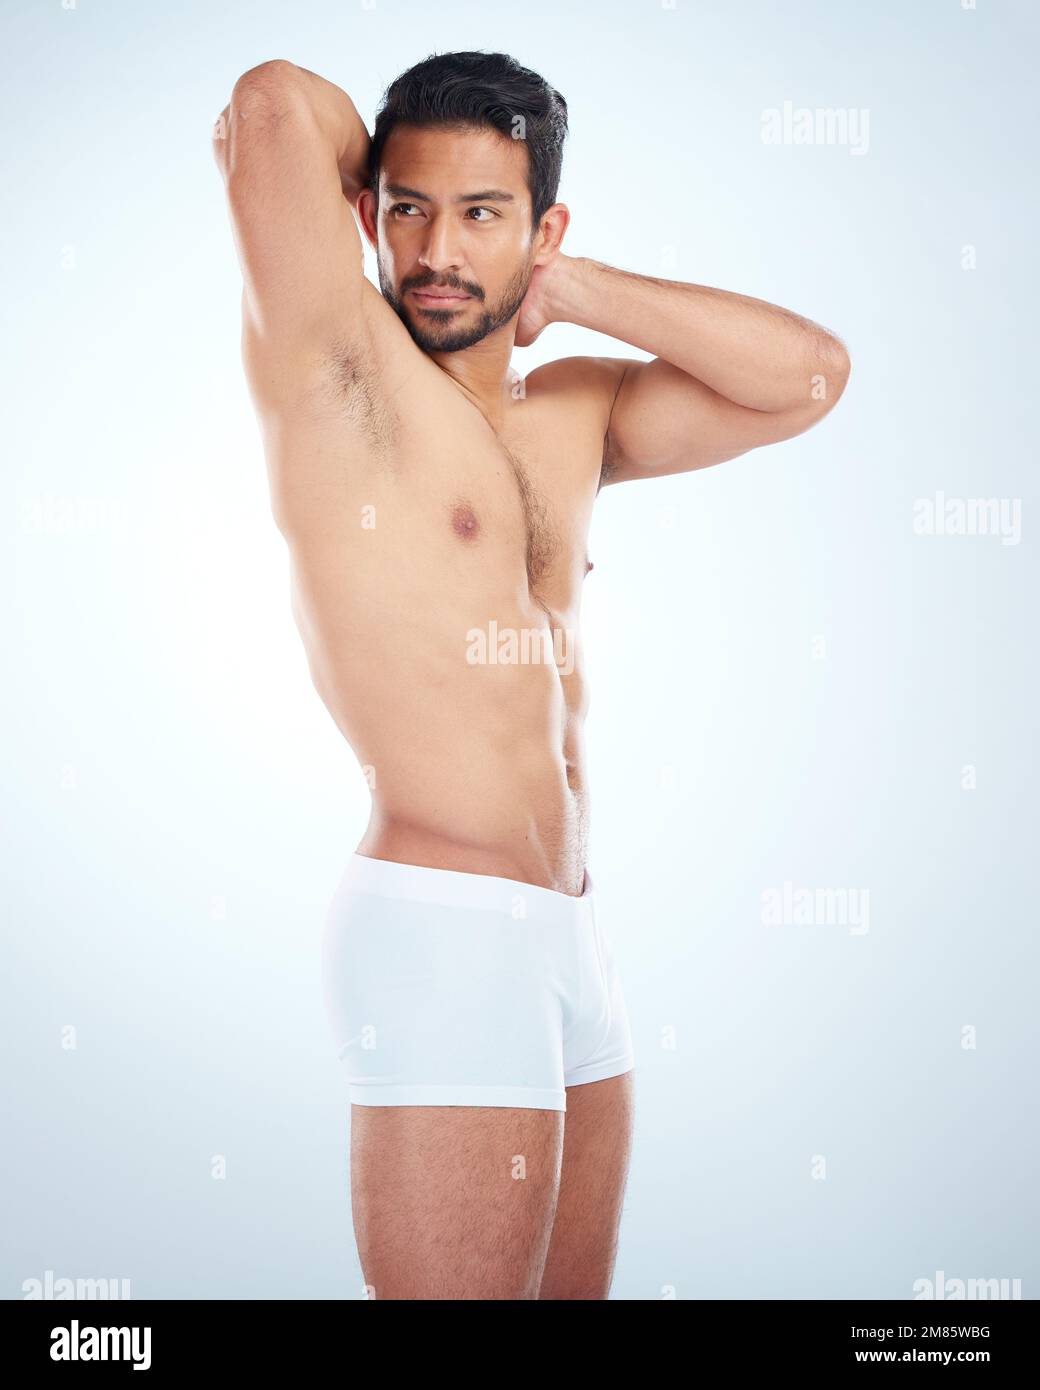 Asian man exercising in his underwear Stock Photo - Alamy